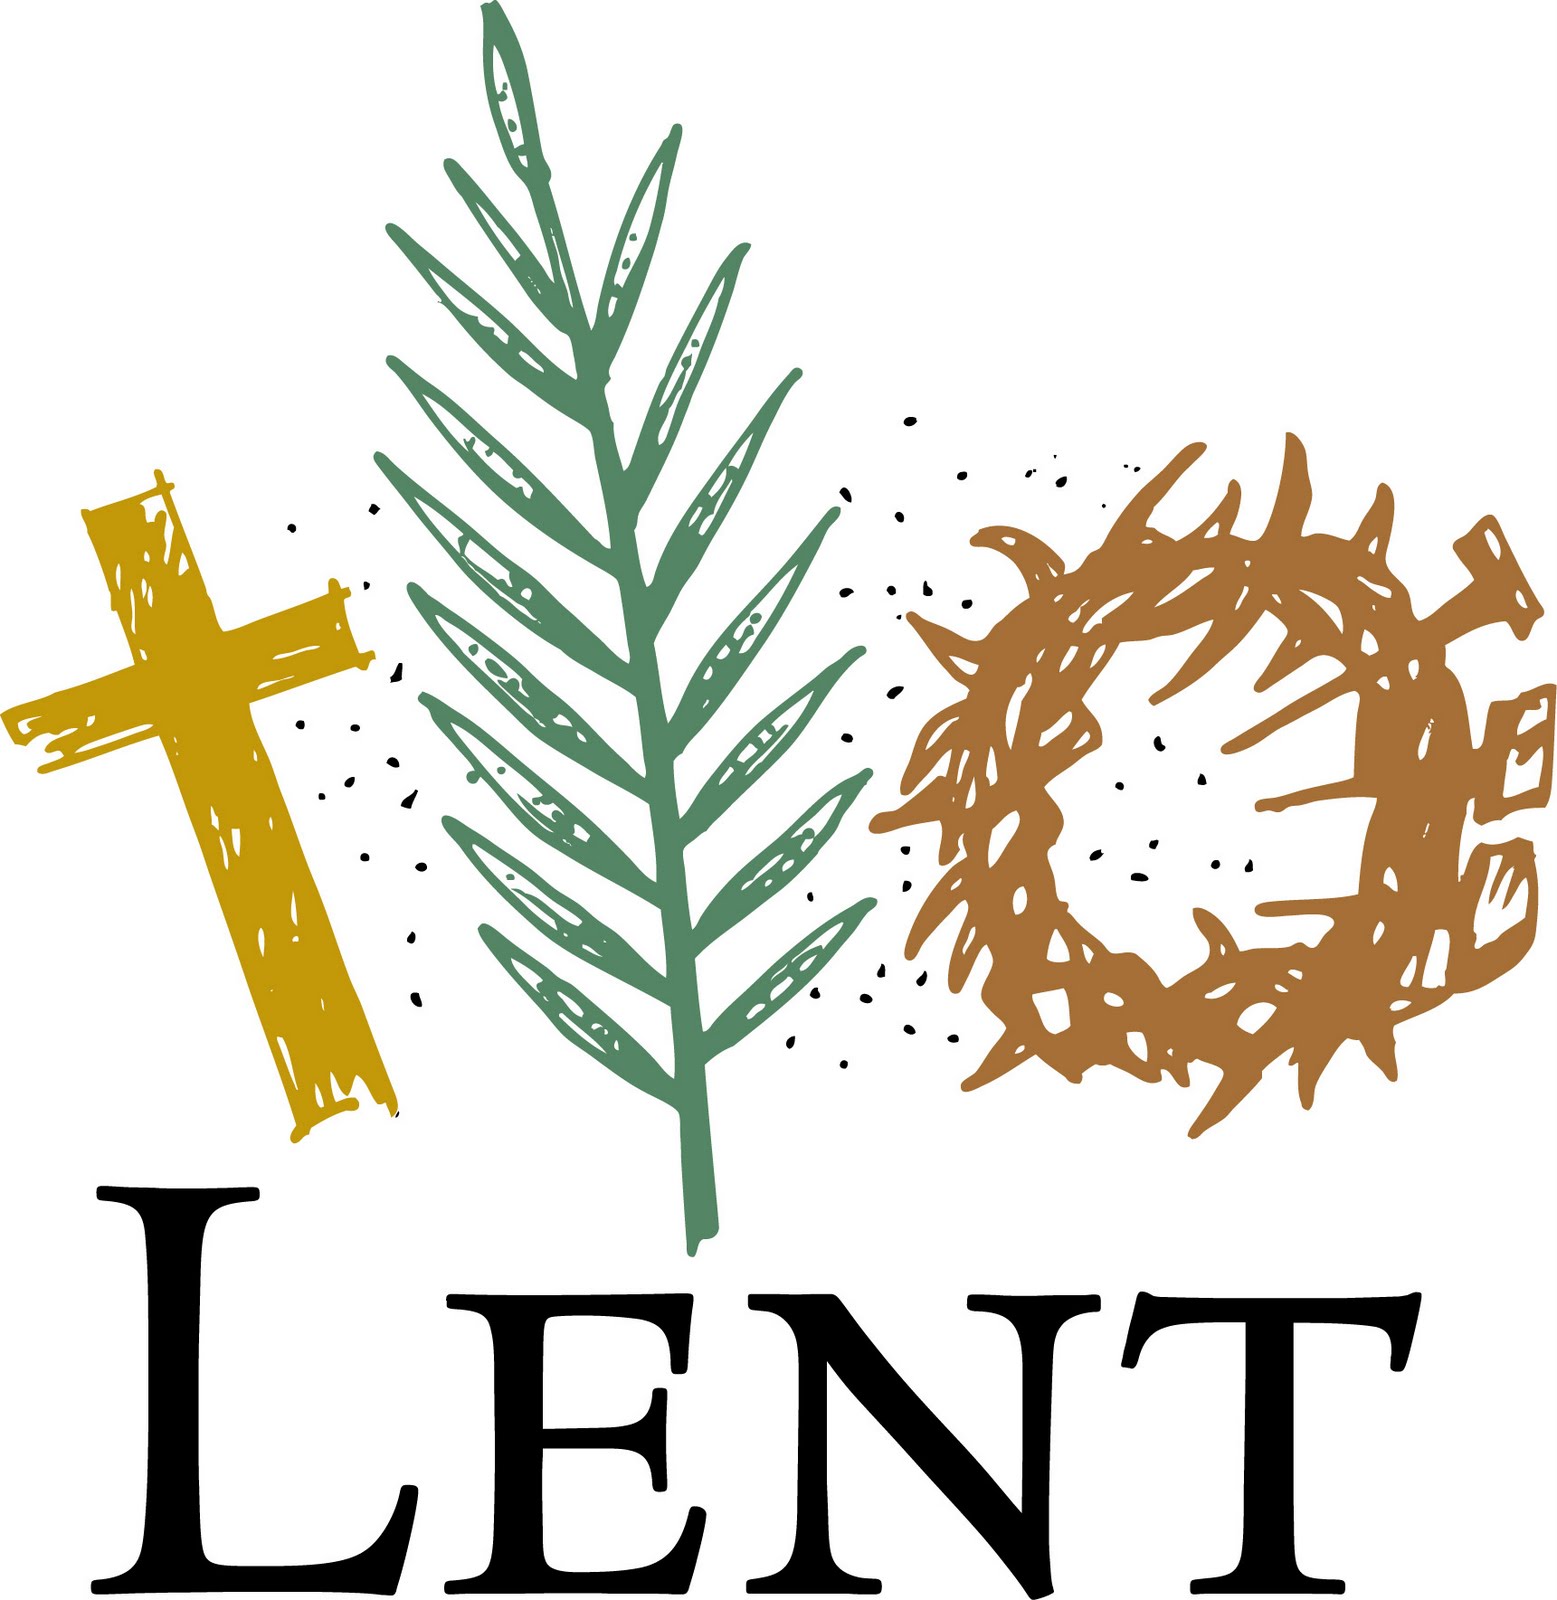 Lent Clip Art Free